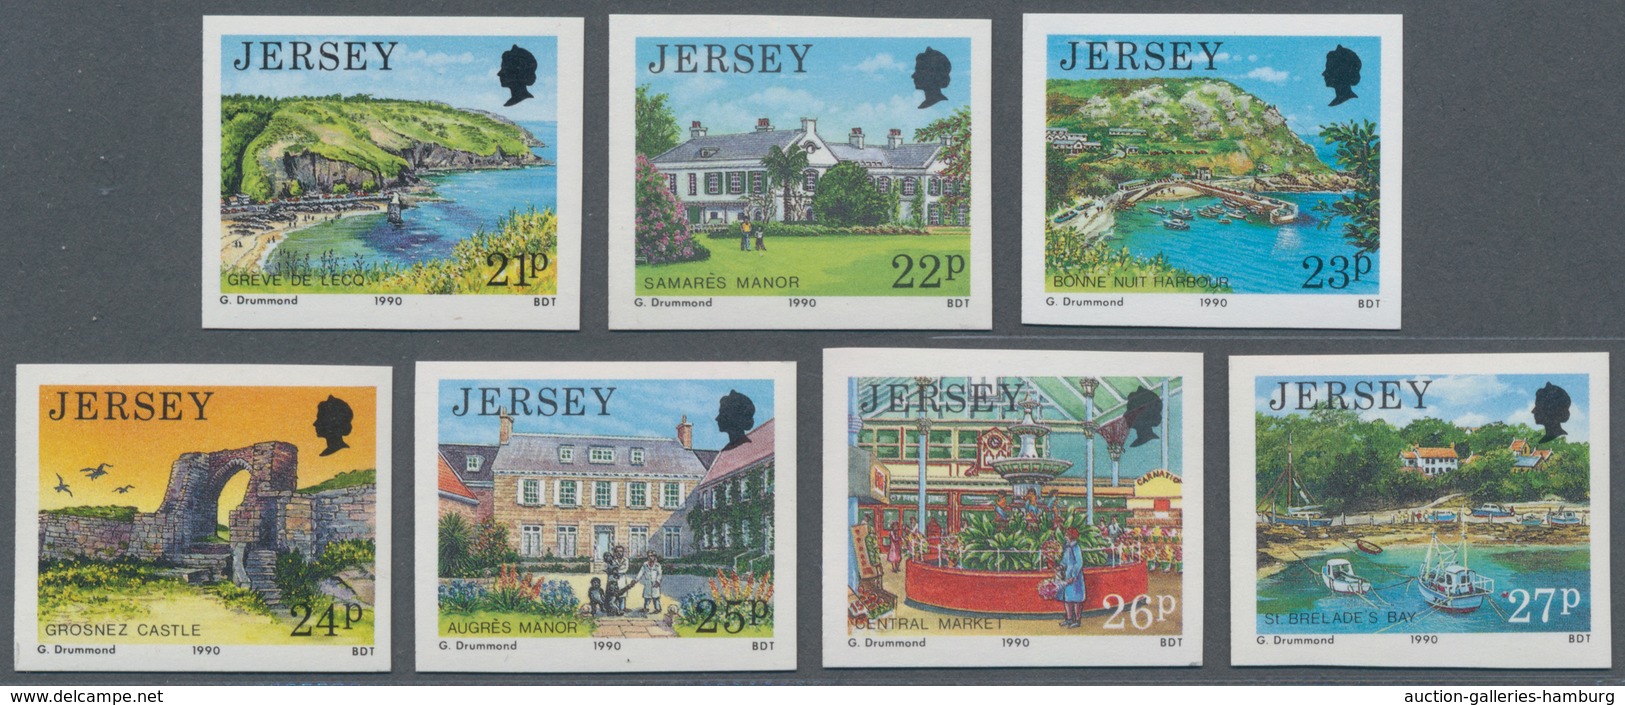 Großbritannien - Jersey: 1990. Complete Definitives Issue (landscapes), 7 Values, In IMPERFORATE Sin - Jersey